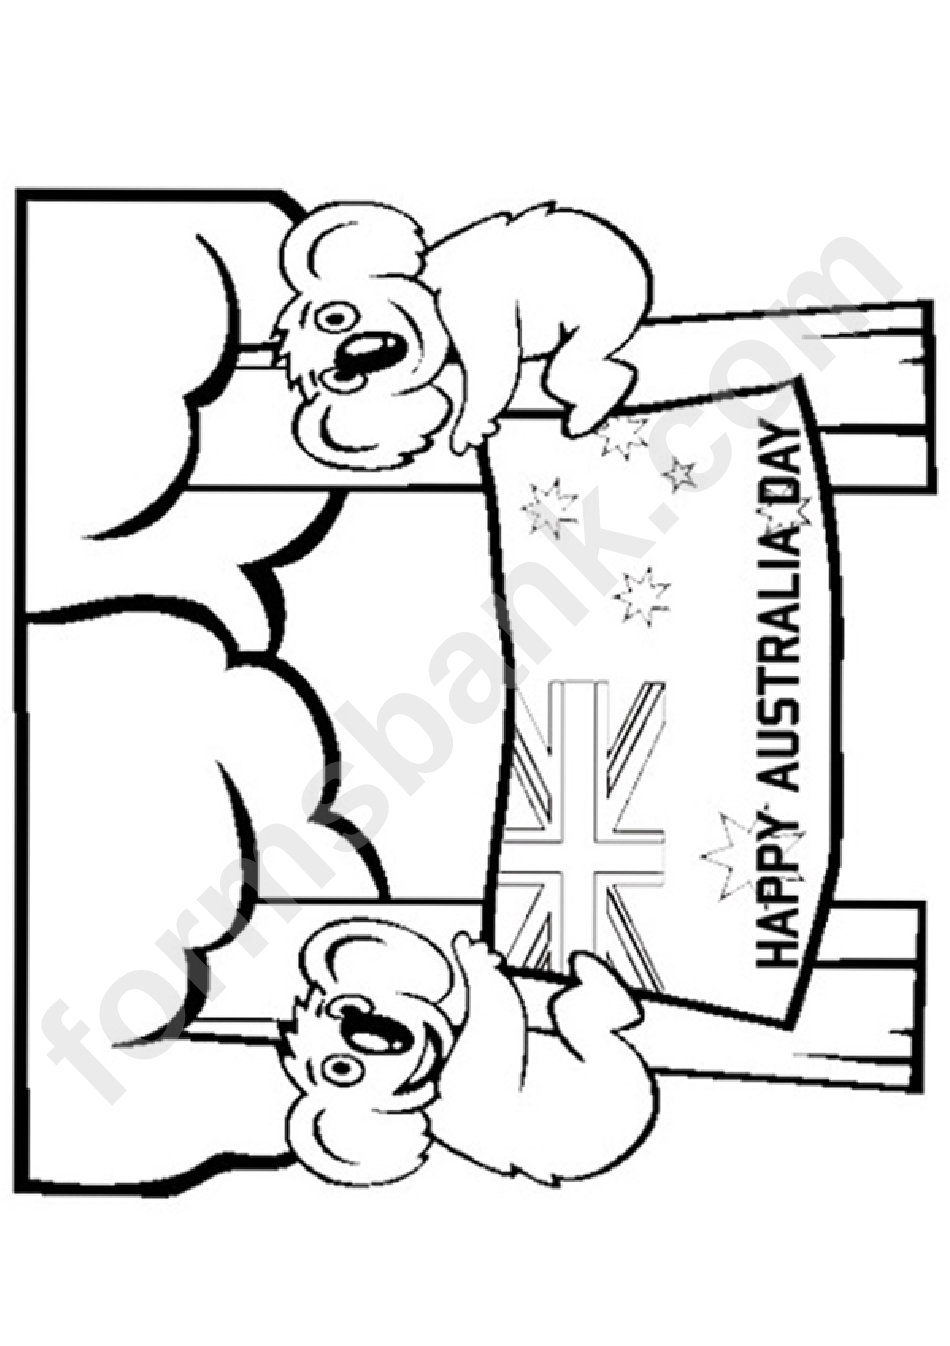 Happy Australia Day Coloring Sheet